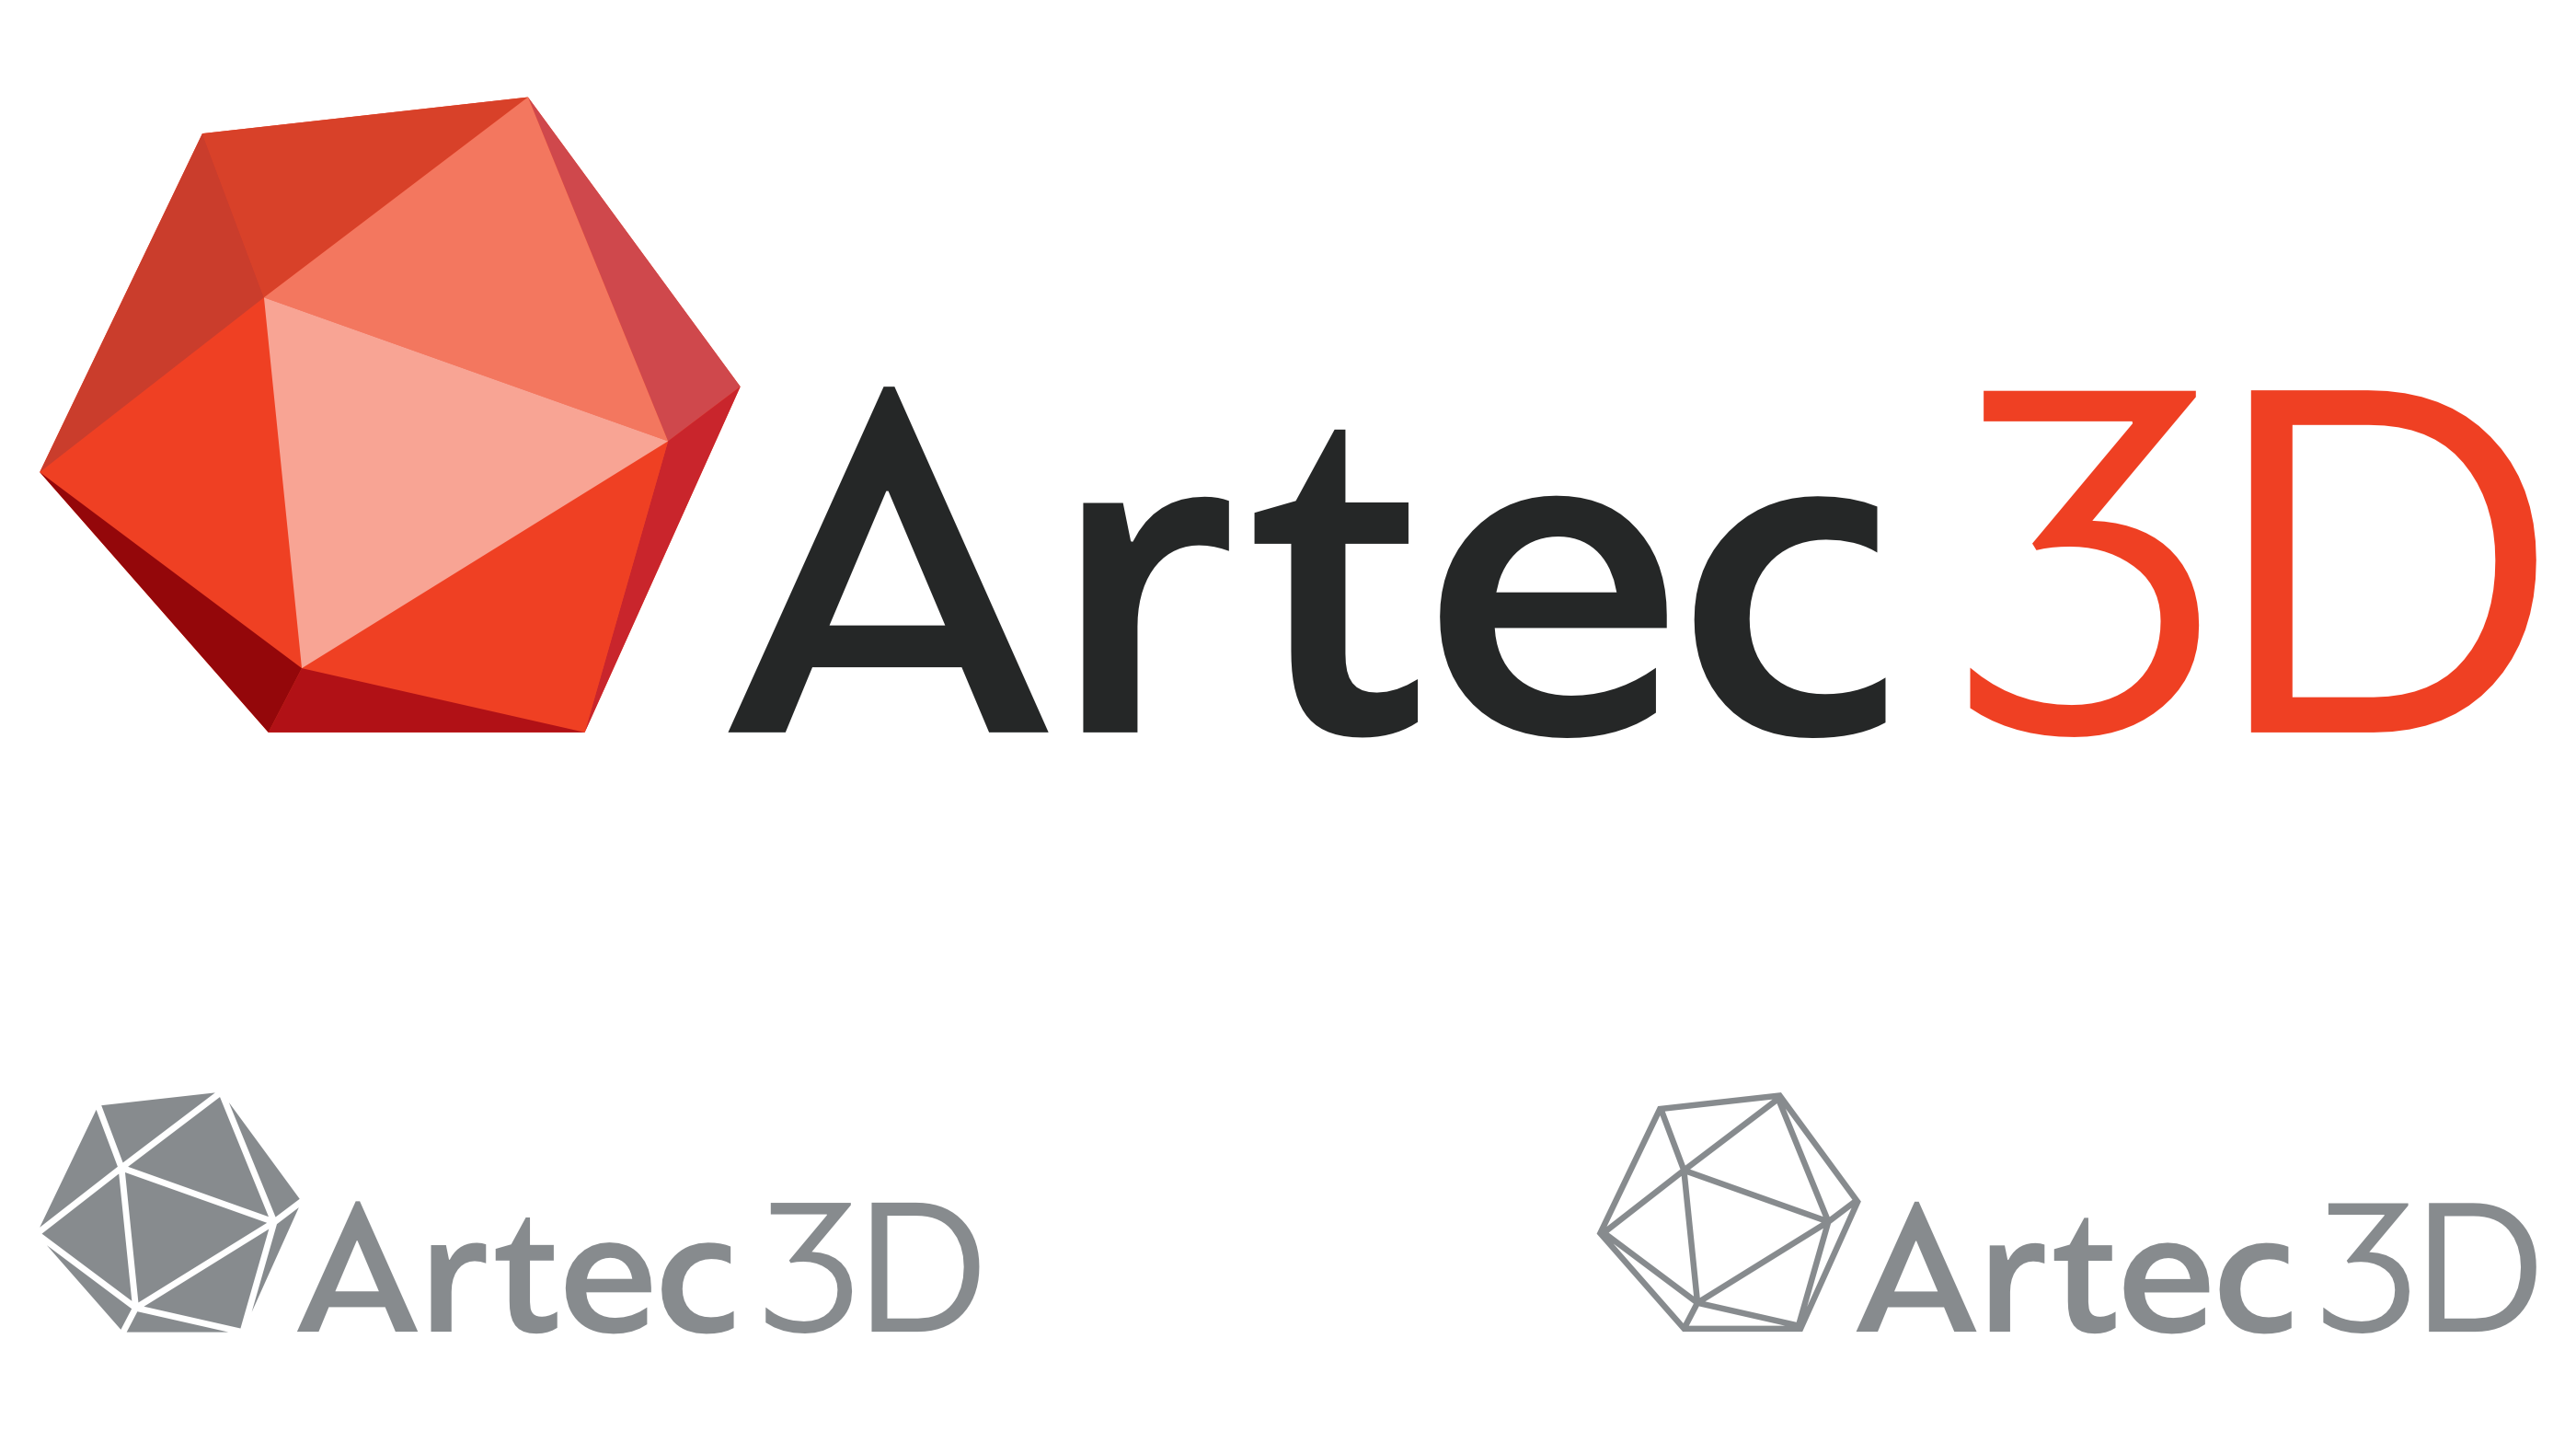 Artec 3D logotype